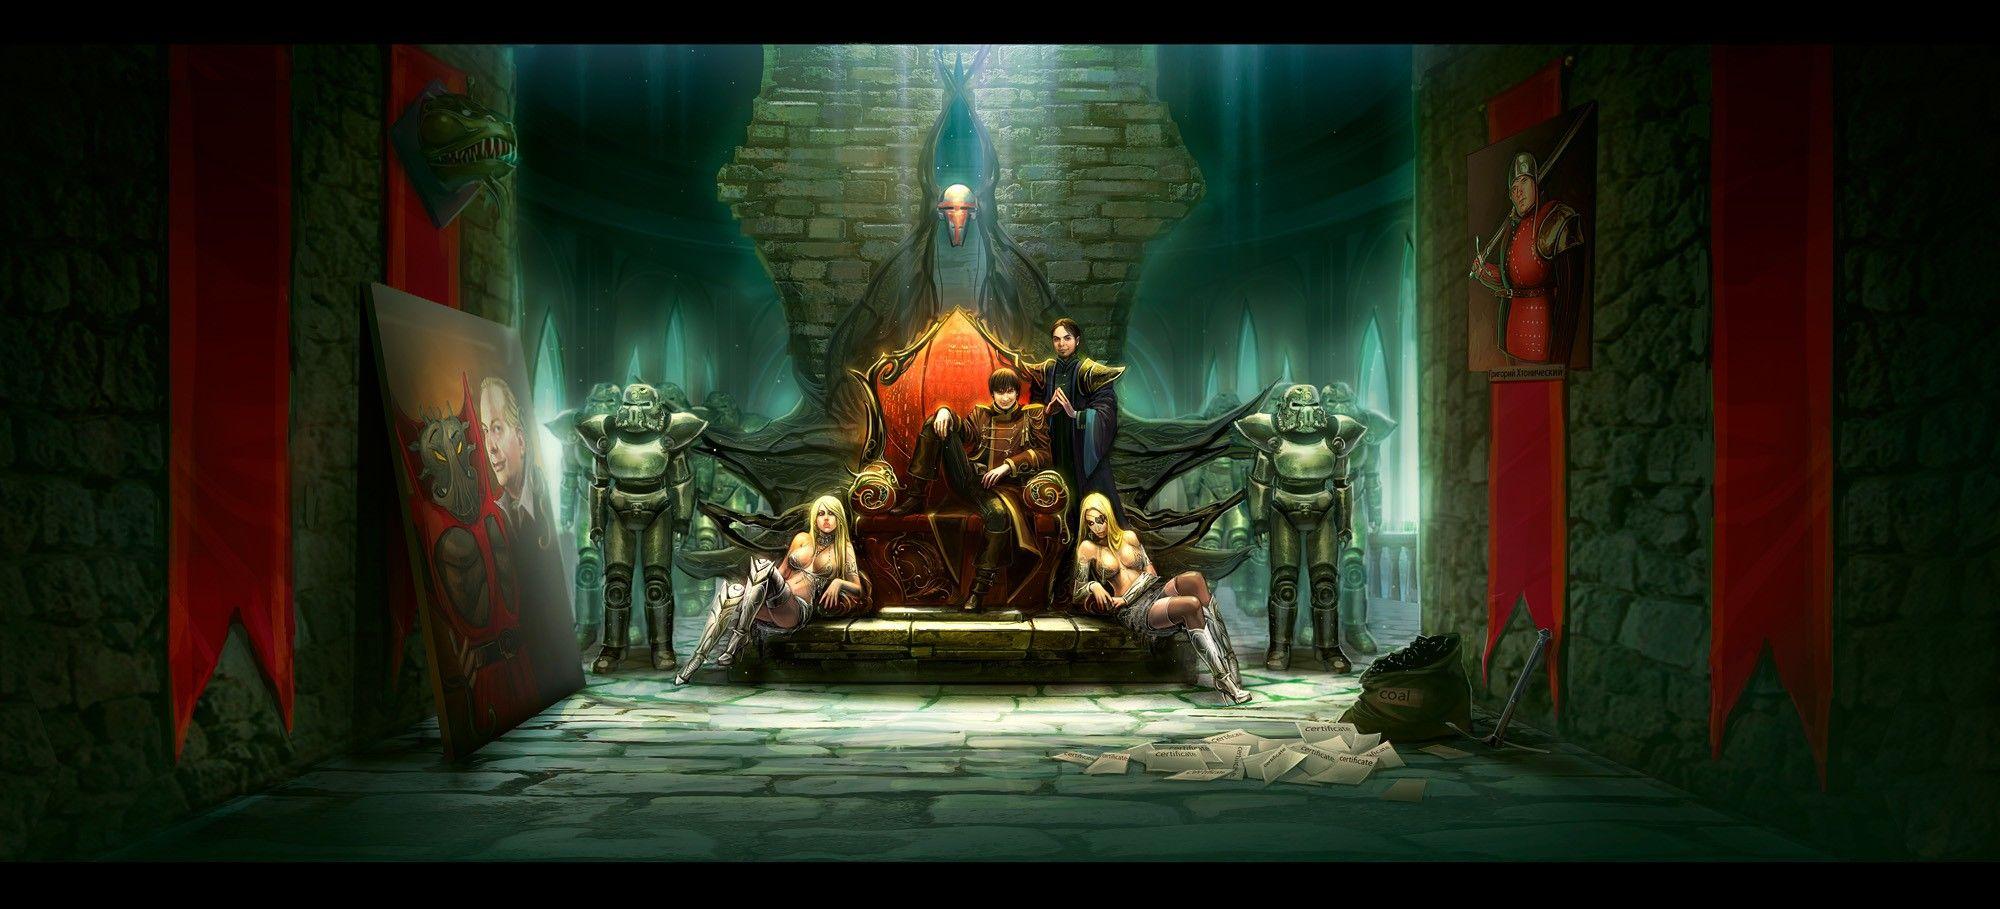 king throne art